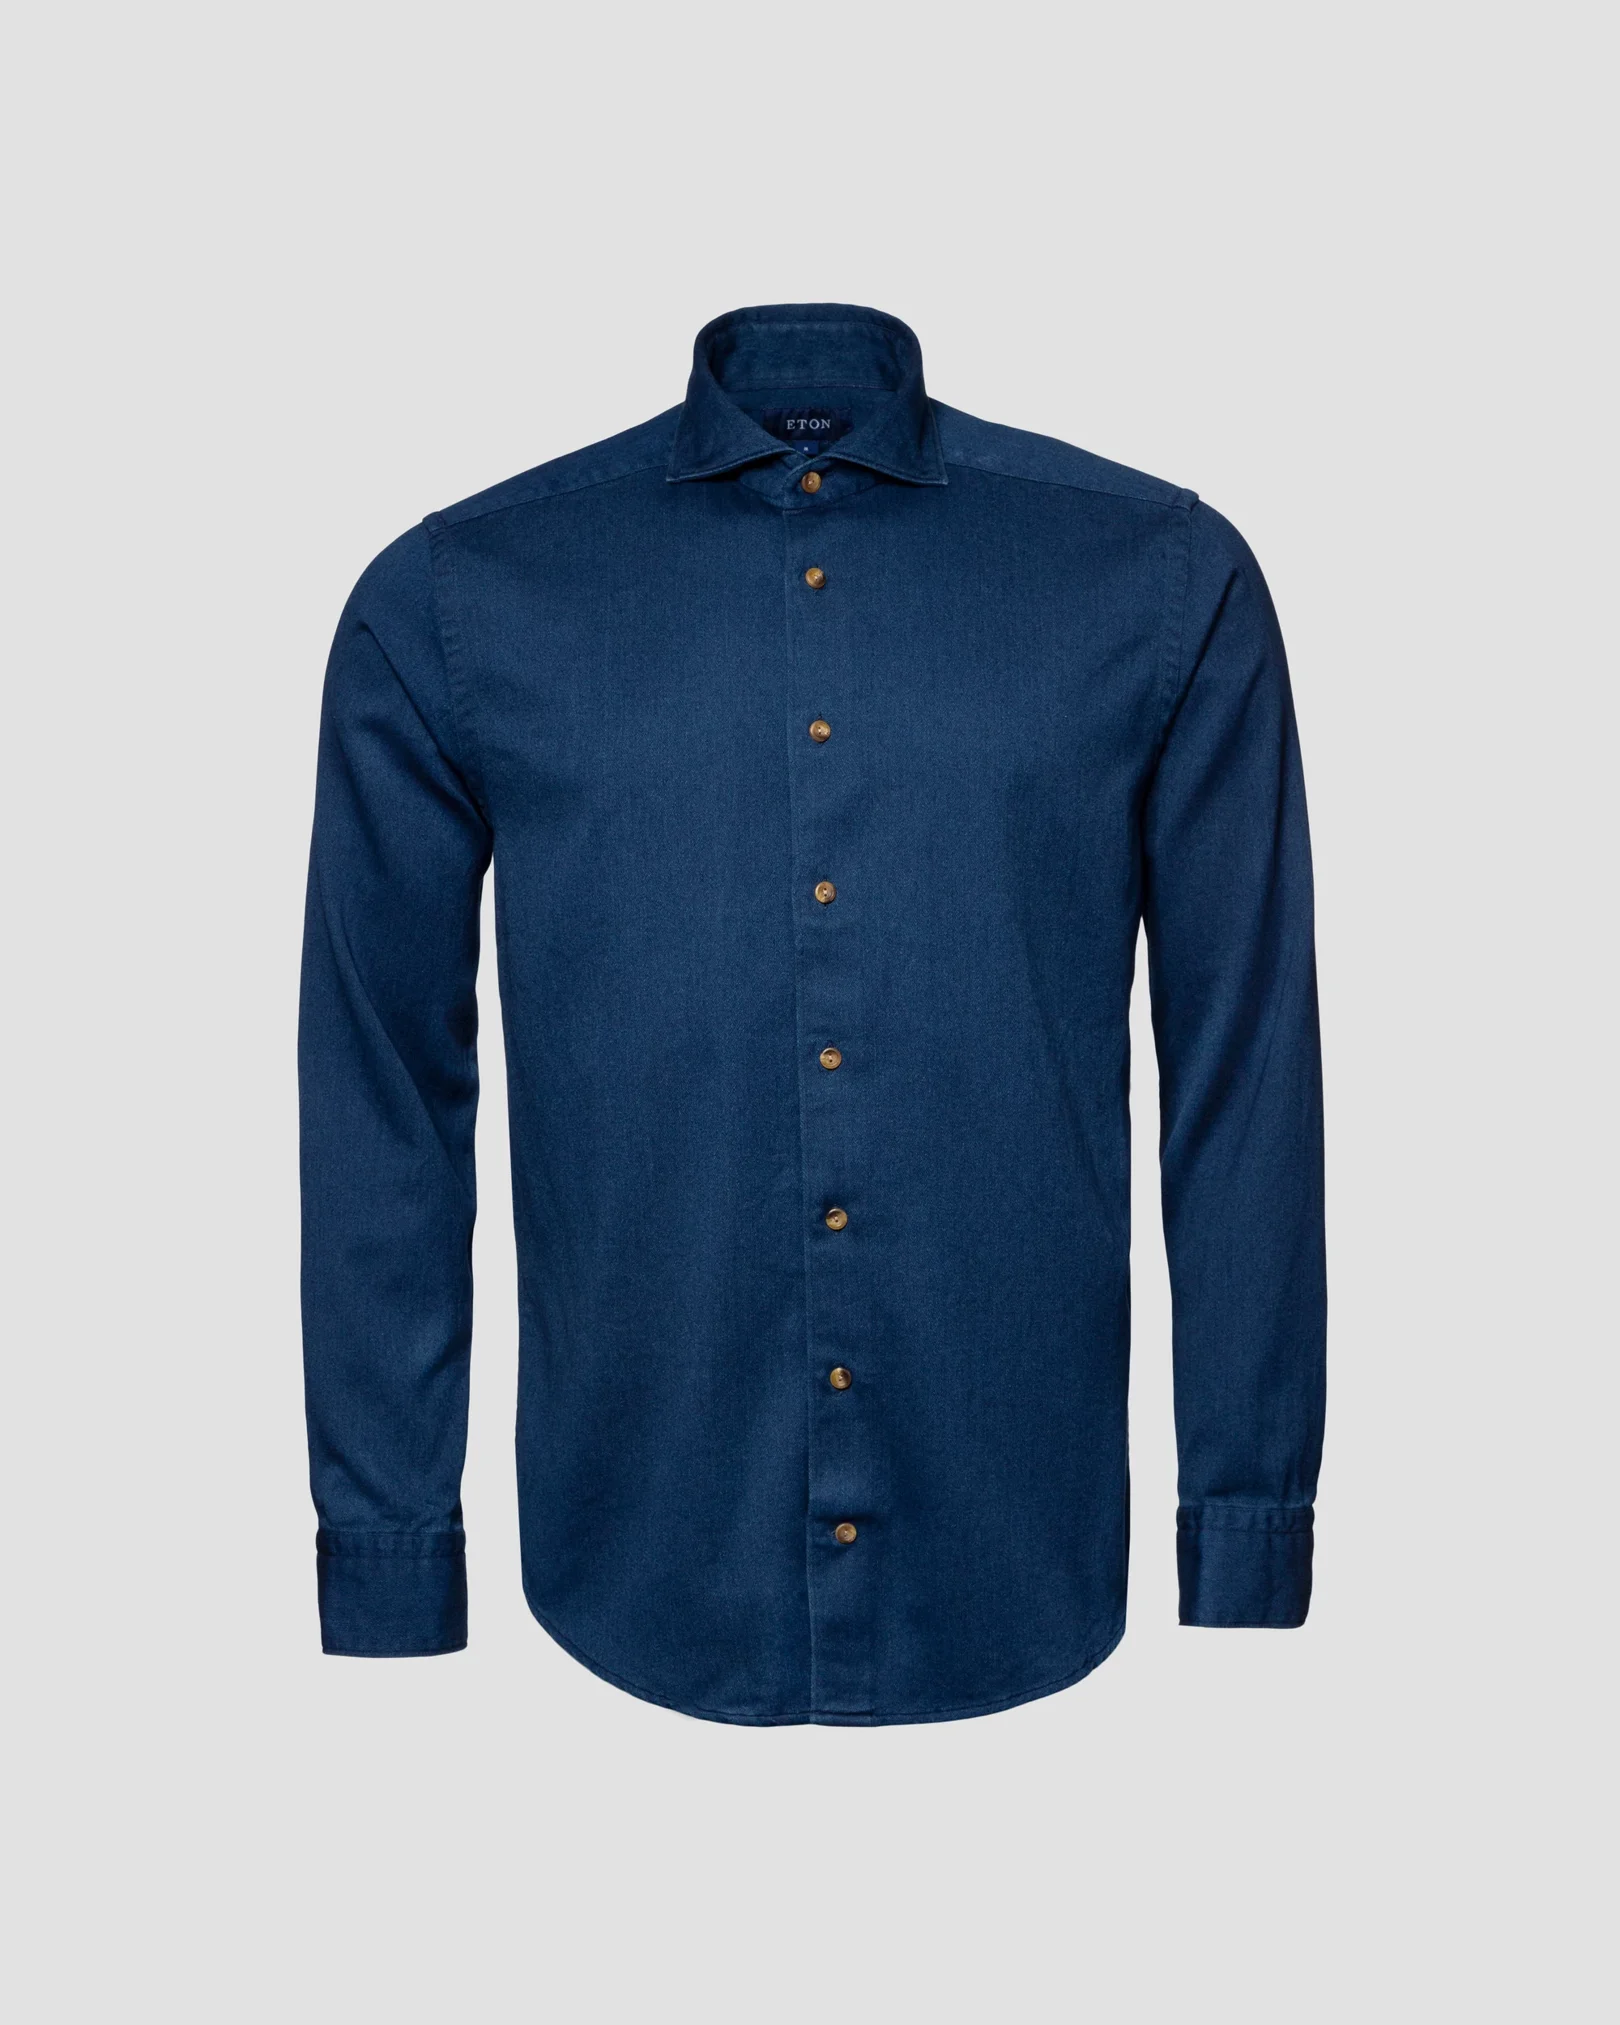 Mens Blue Denim Shirt - 5409 - AS Colour AU